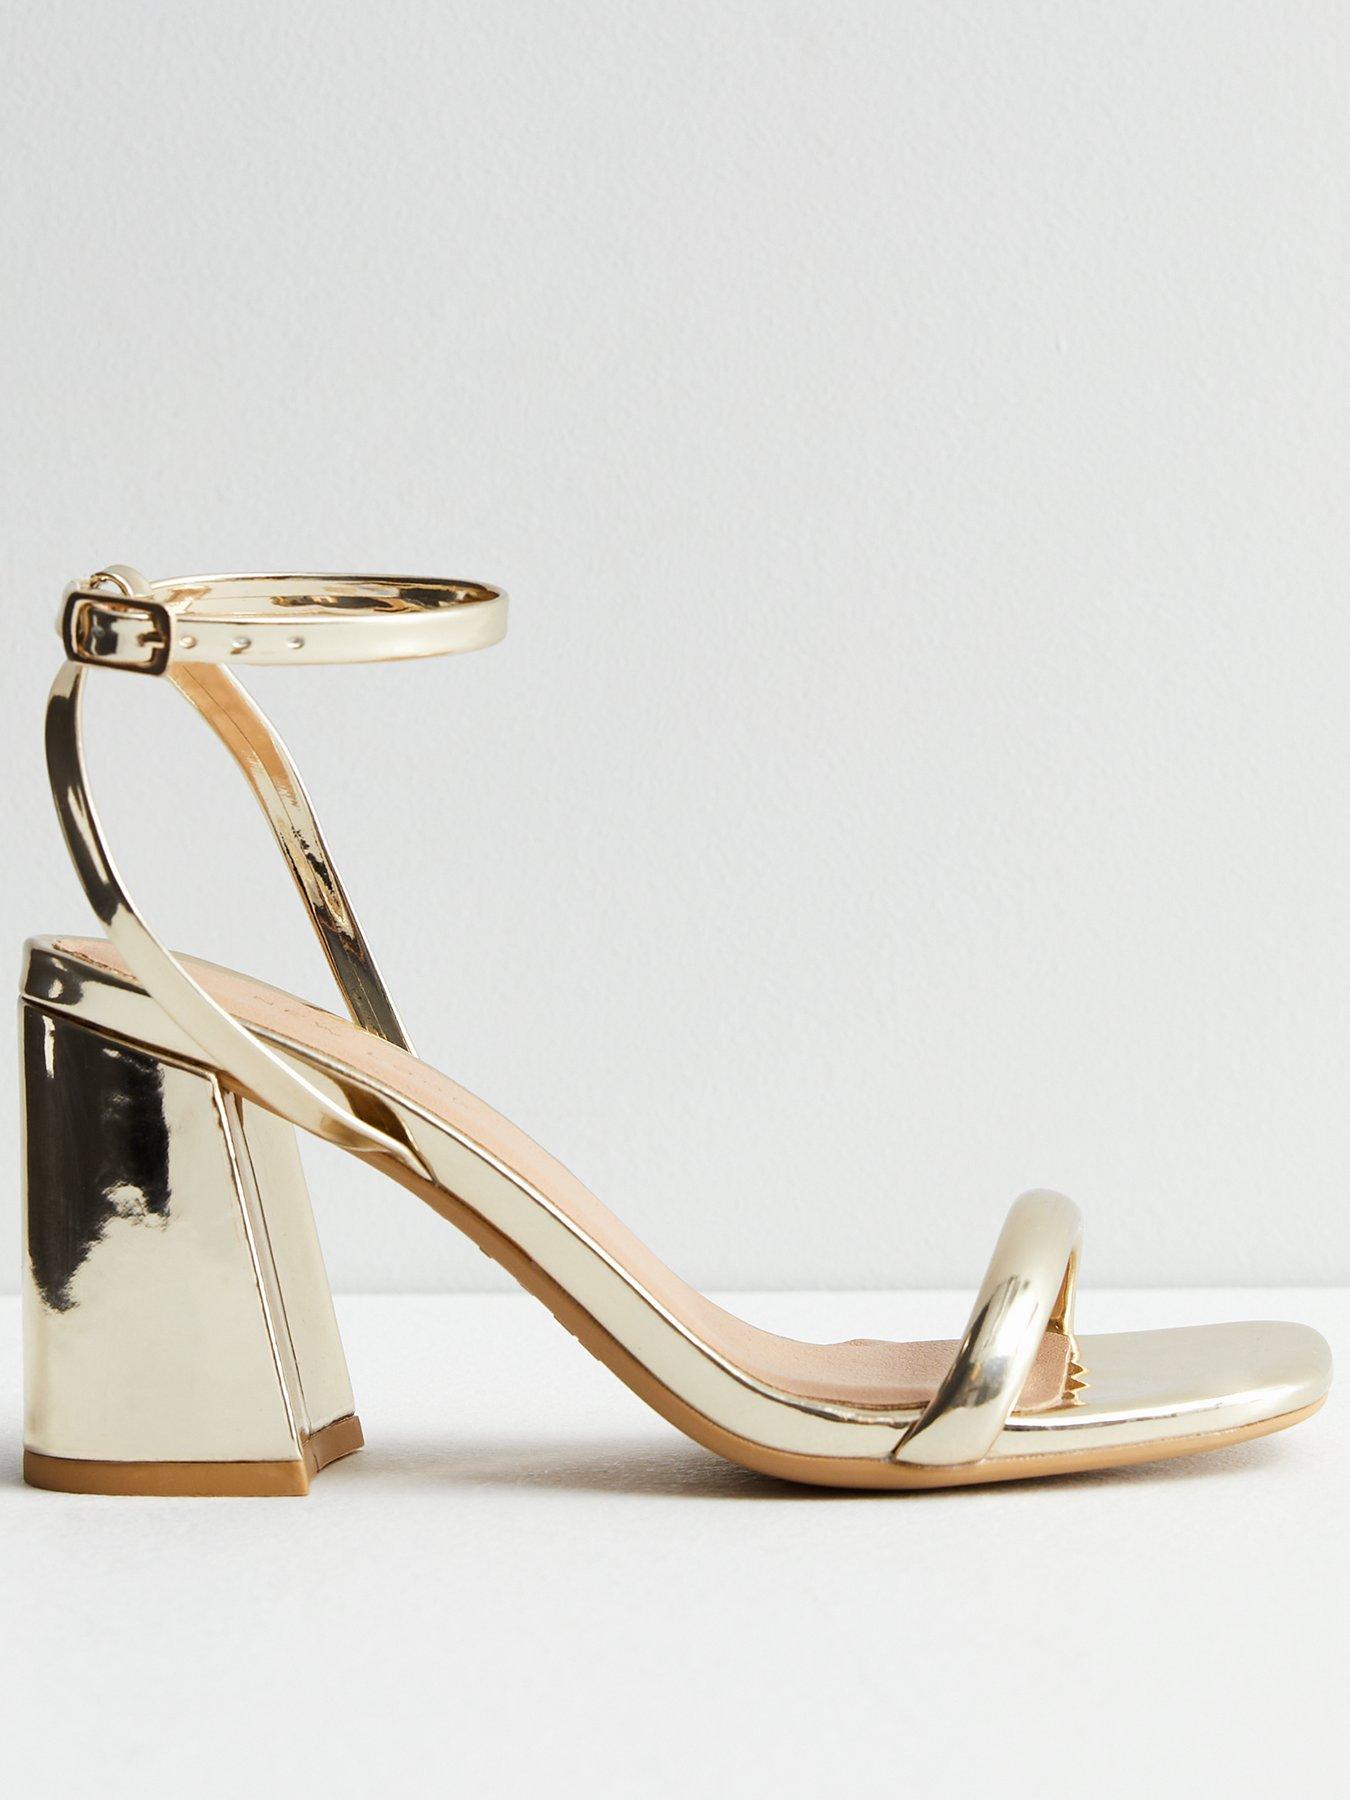 NWOT Abella Silver 3 inch Heels | Silver 3 inch heels, 3 inch heels, Heels